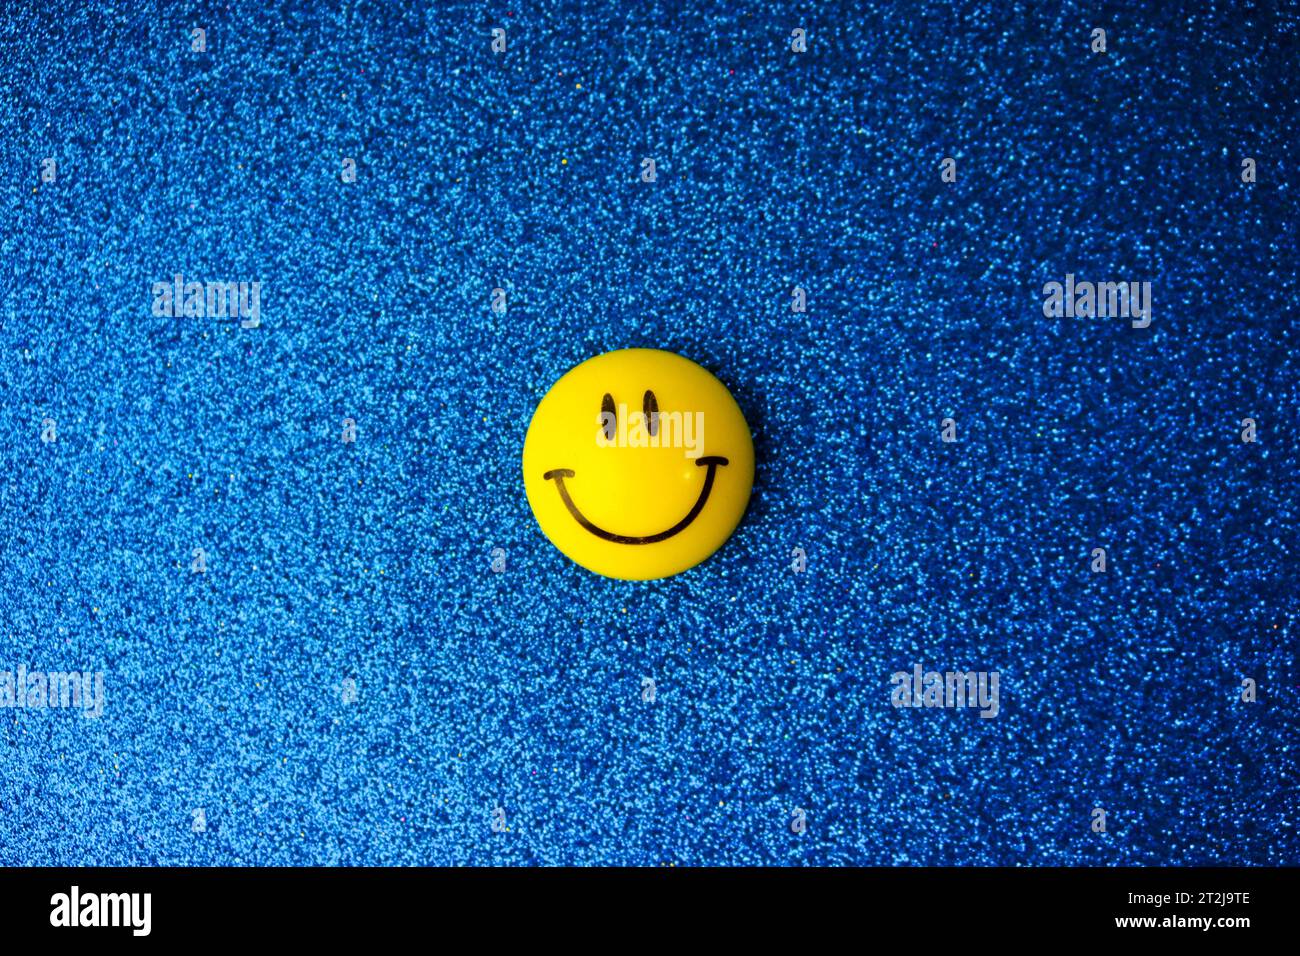 Round plastic yellow joyful smiling smiling toy round face Emoji on a blue background. Stock Photo